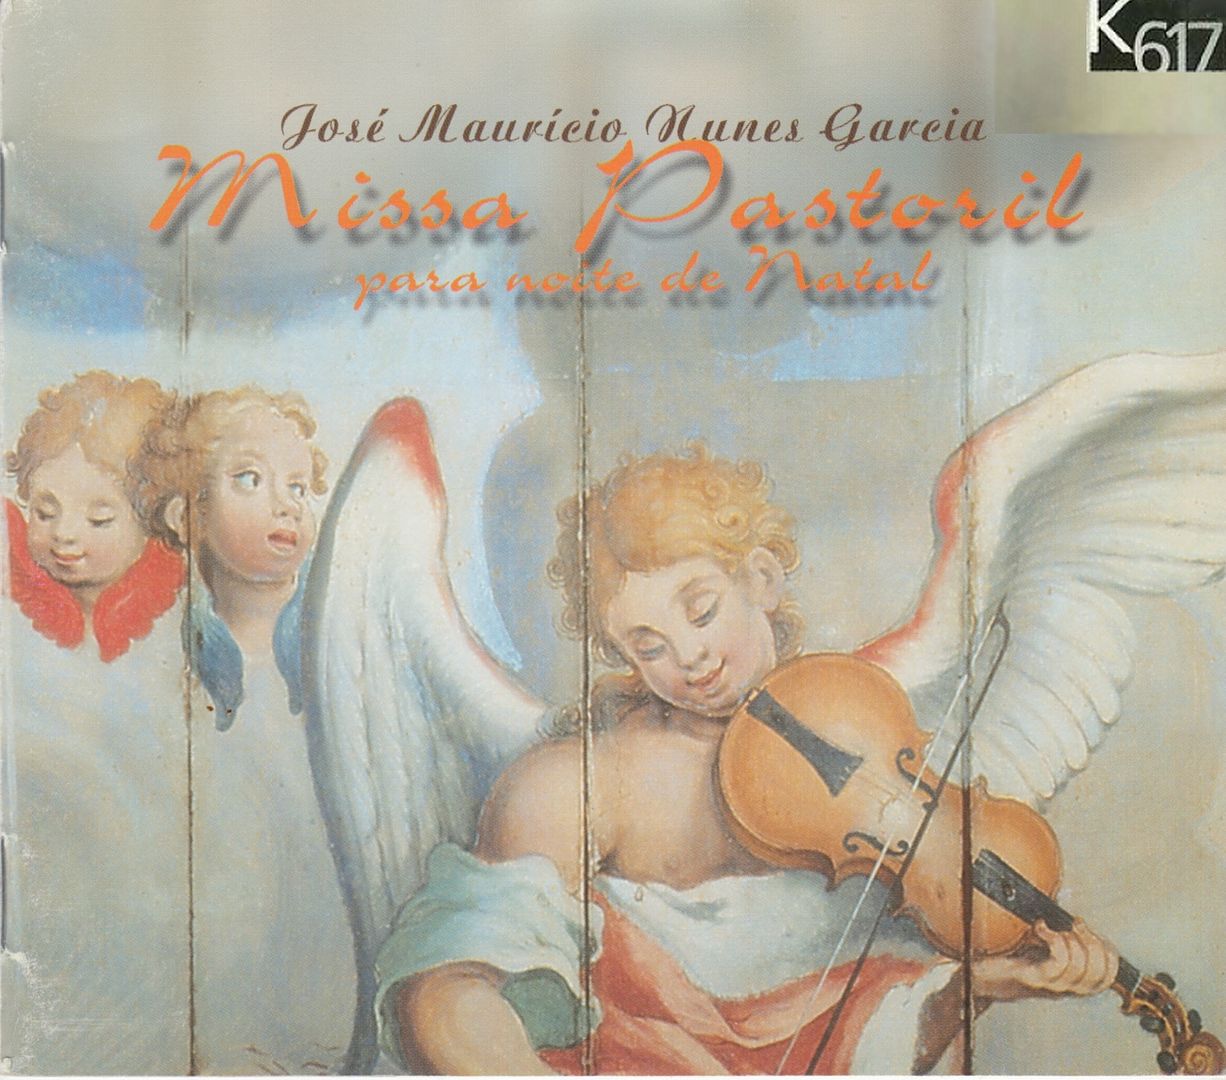 booklet20front - José Maurício Garcia Nunes – Missa Pastoril para noite de Natal FLAC